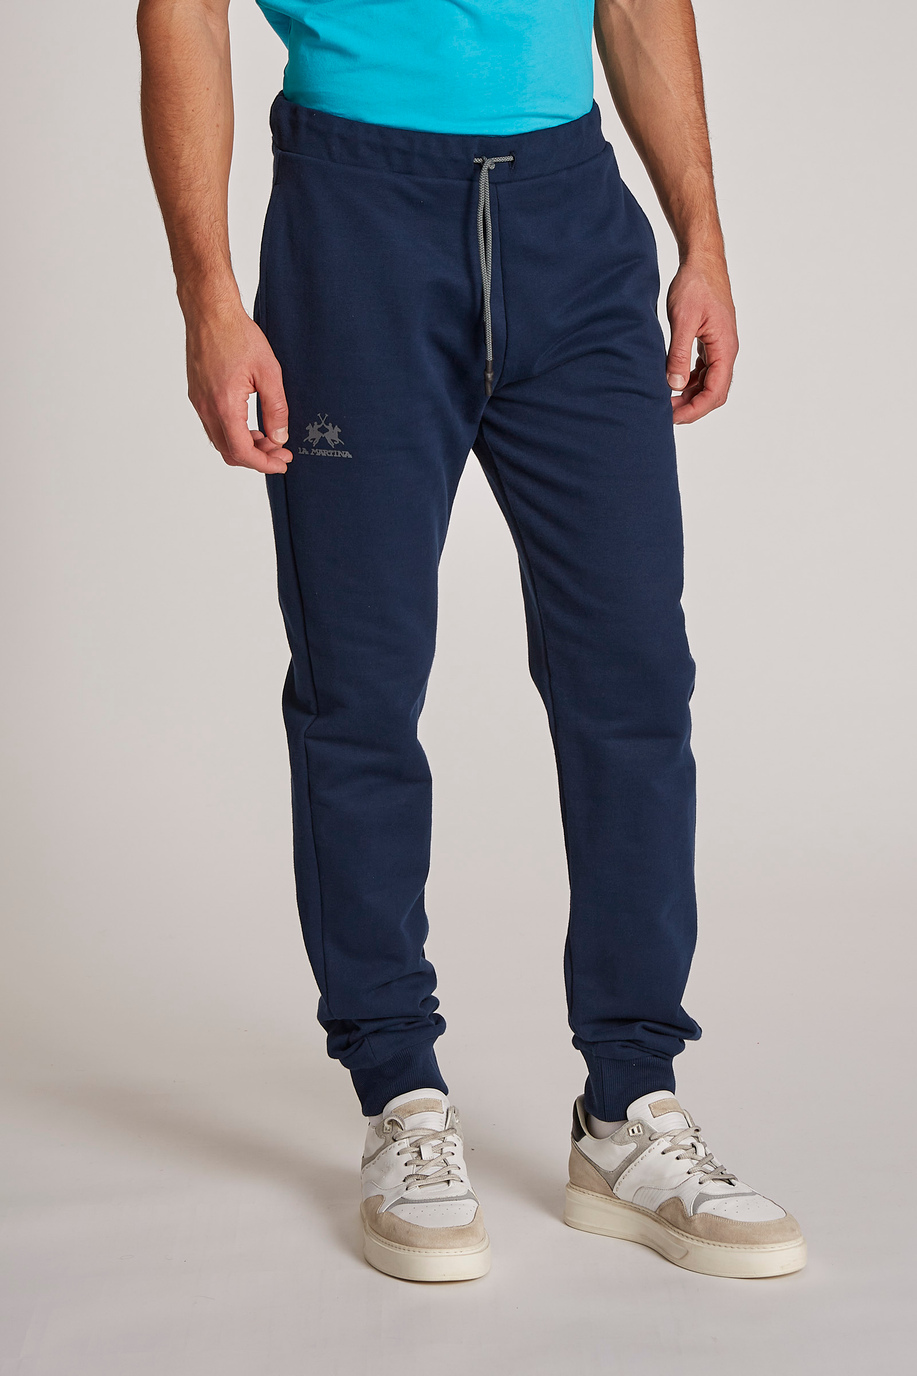 Pantalone da uomo regular fit - BP + BR + CC (all seasons - never on sale) | La Martina - Official Online Shop